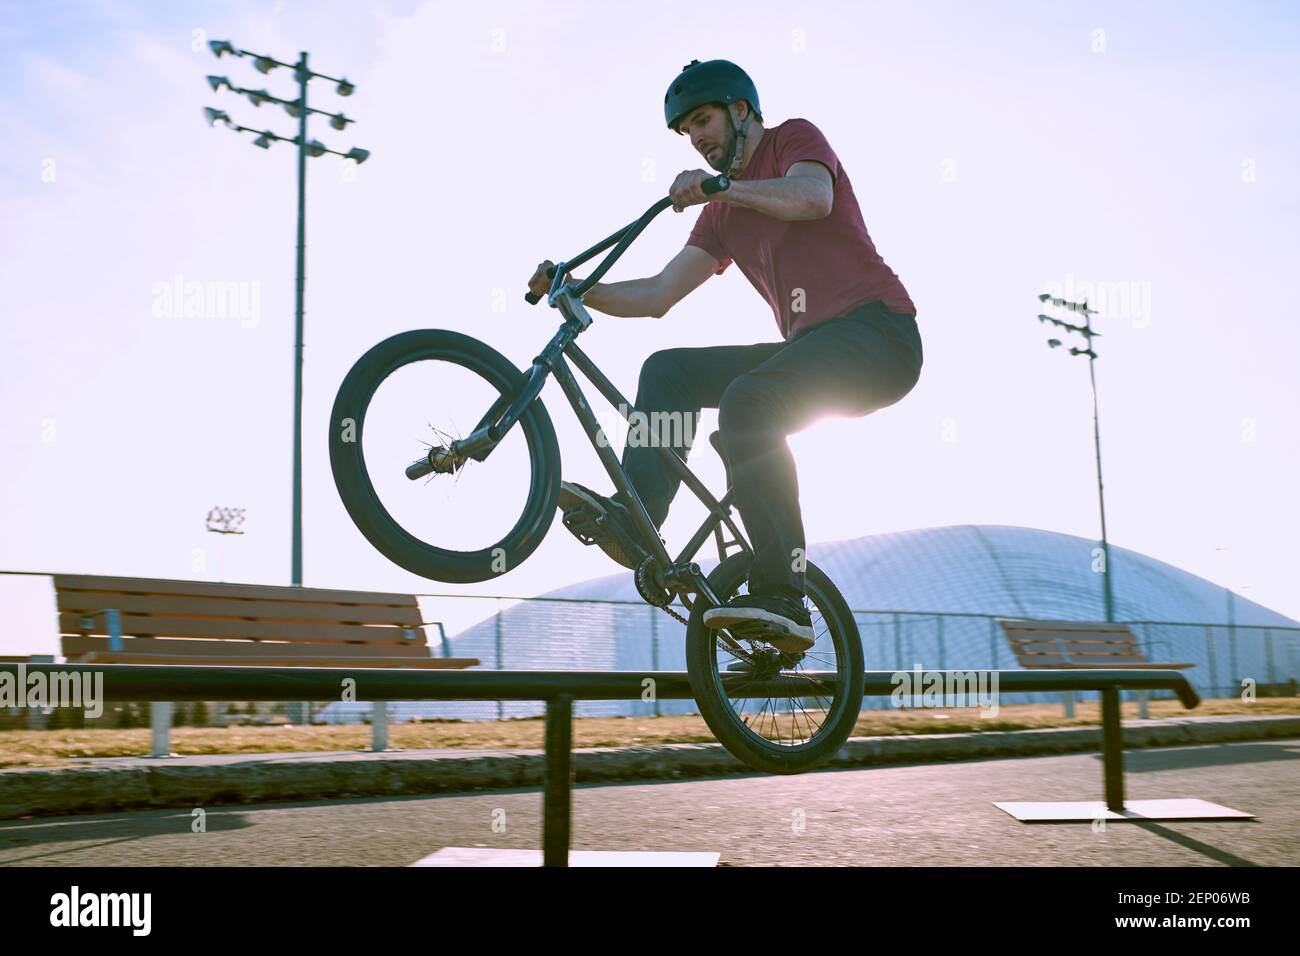 Bmx bike trick peg grind hi-res stock photography and images - Alamy